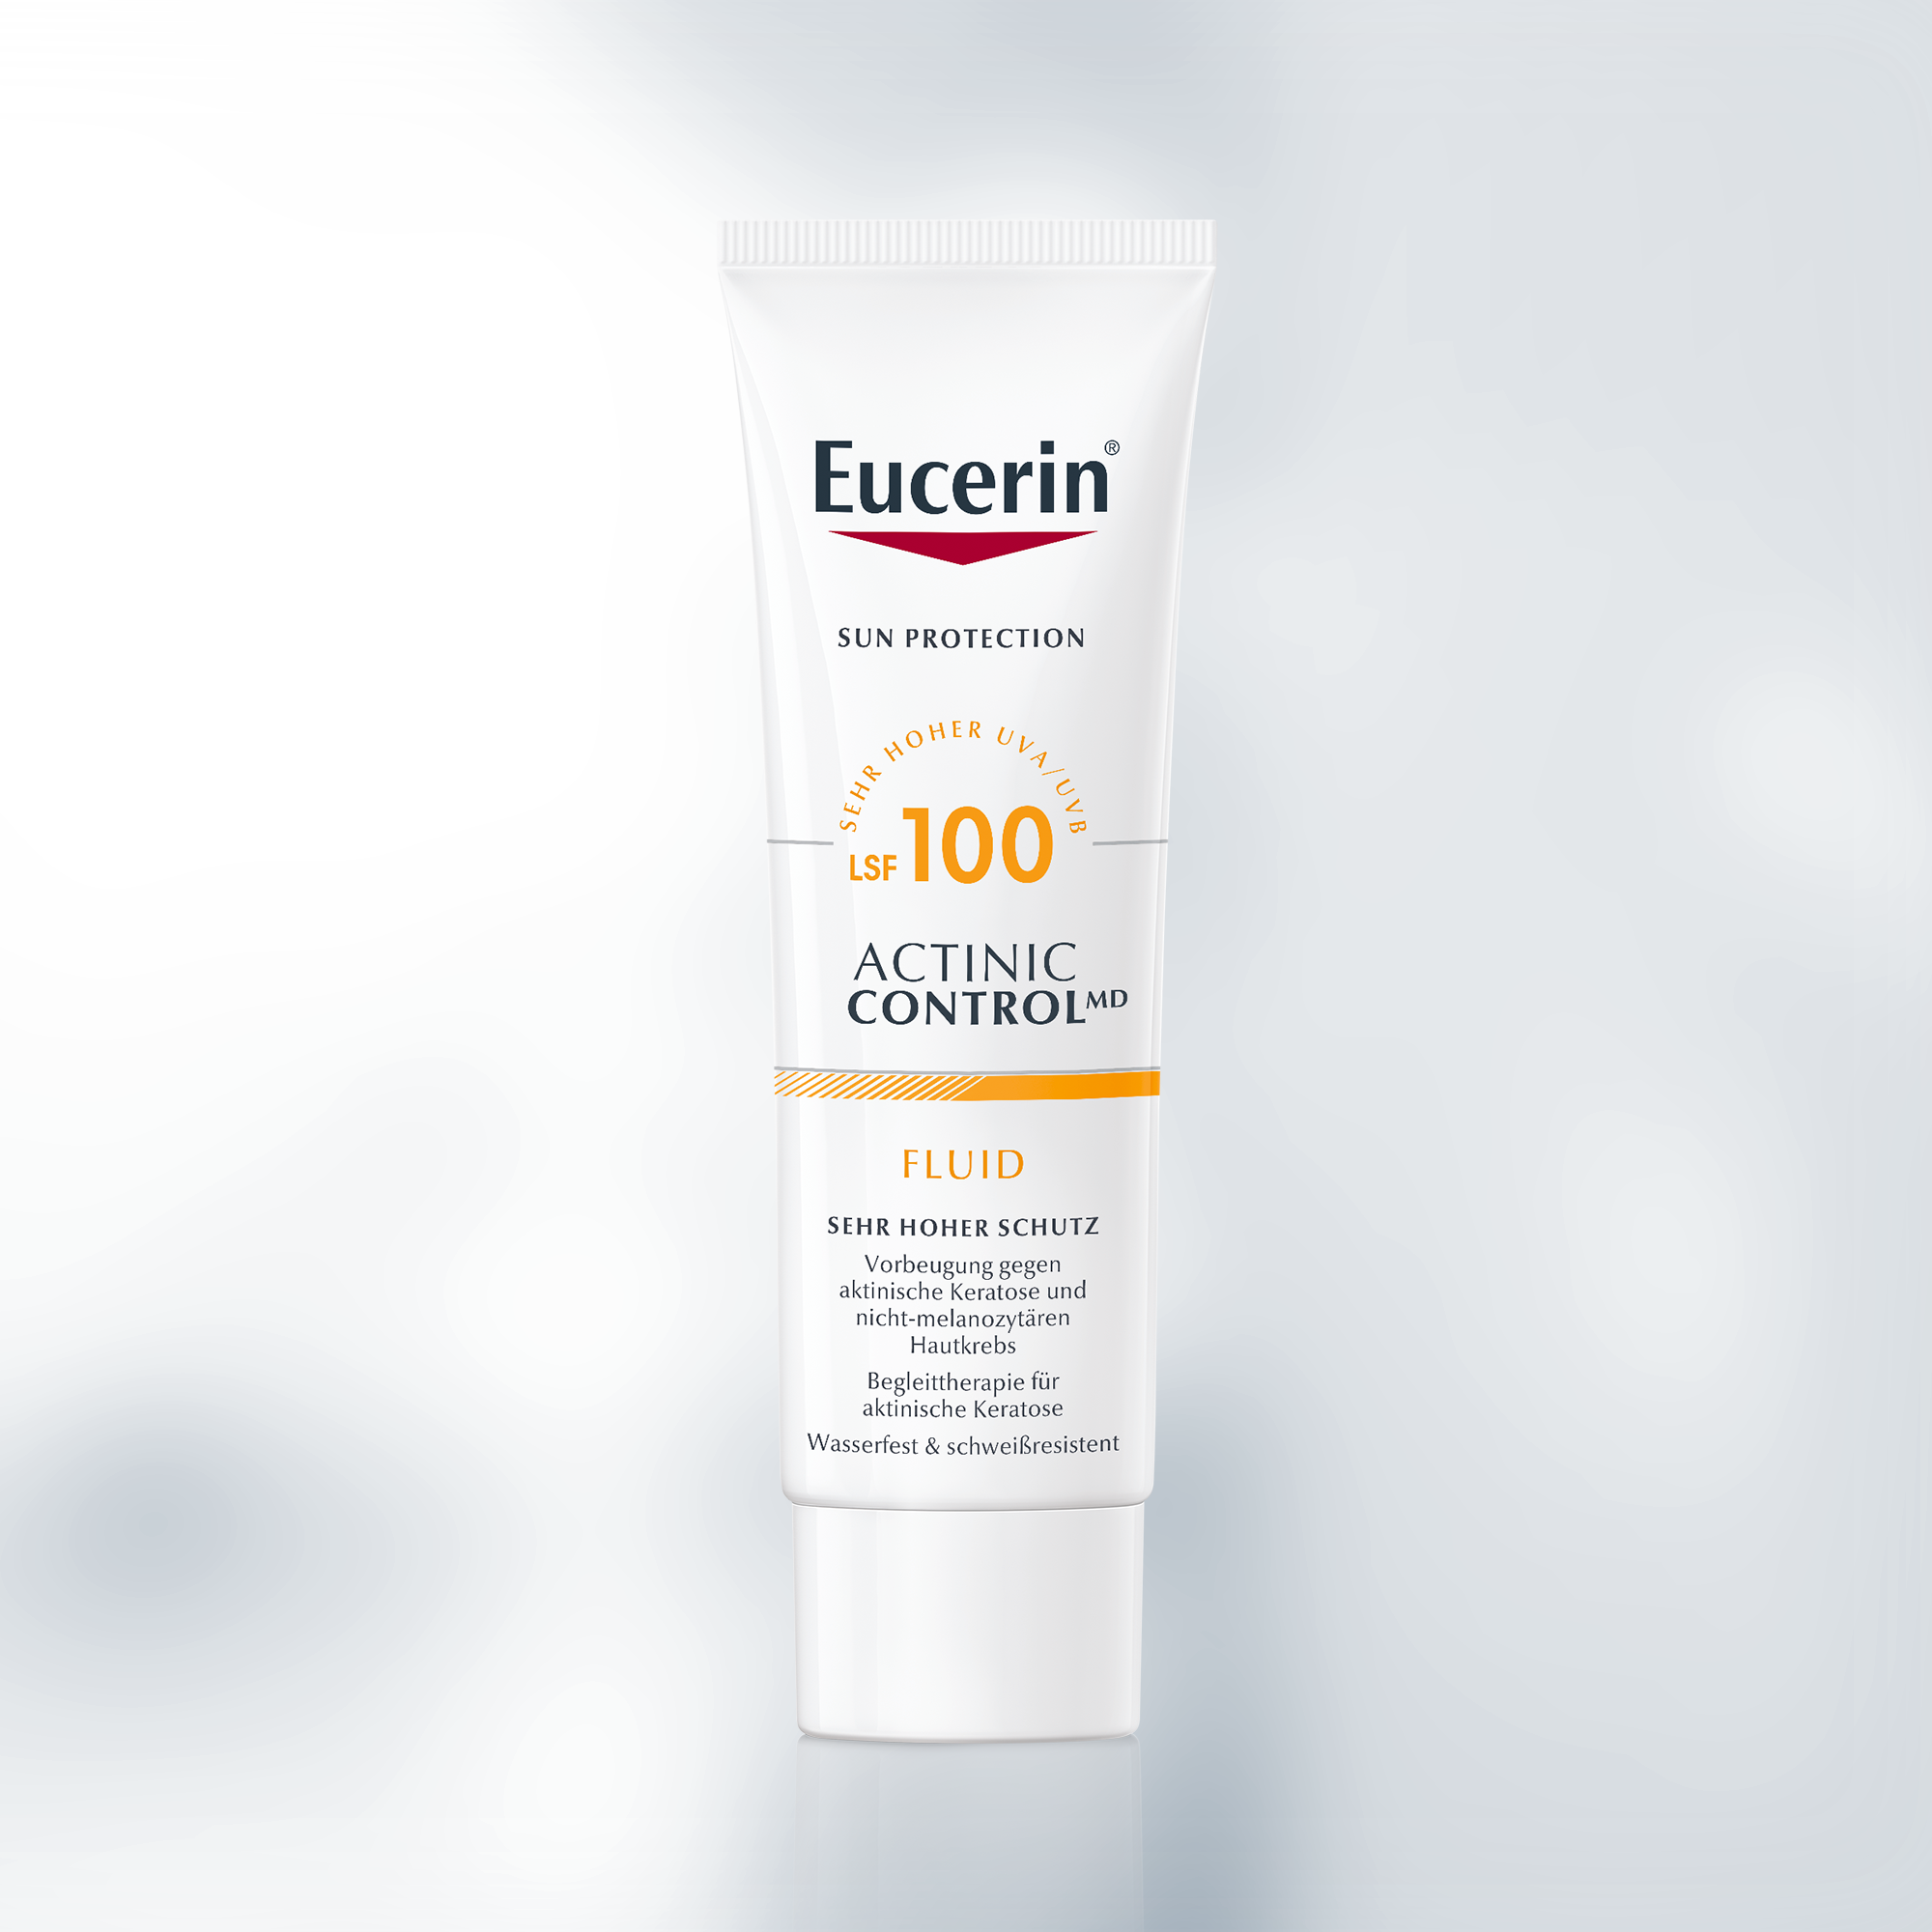 EUCERIN® SUN ACTINIC CONTROL MD SPF 100